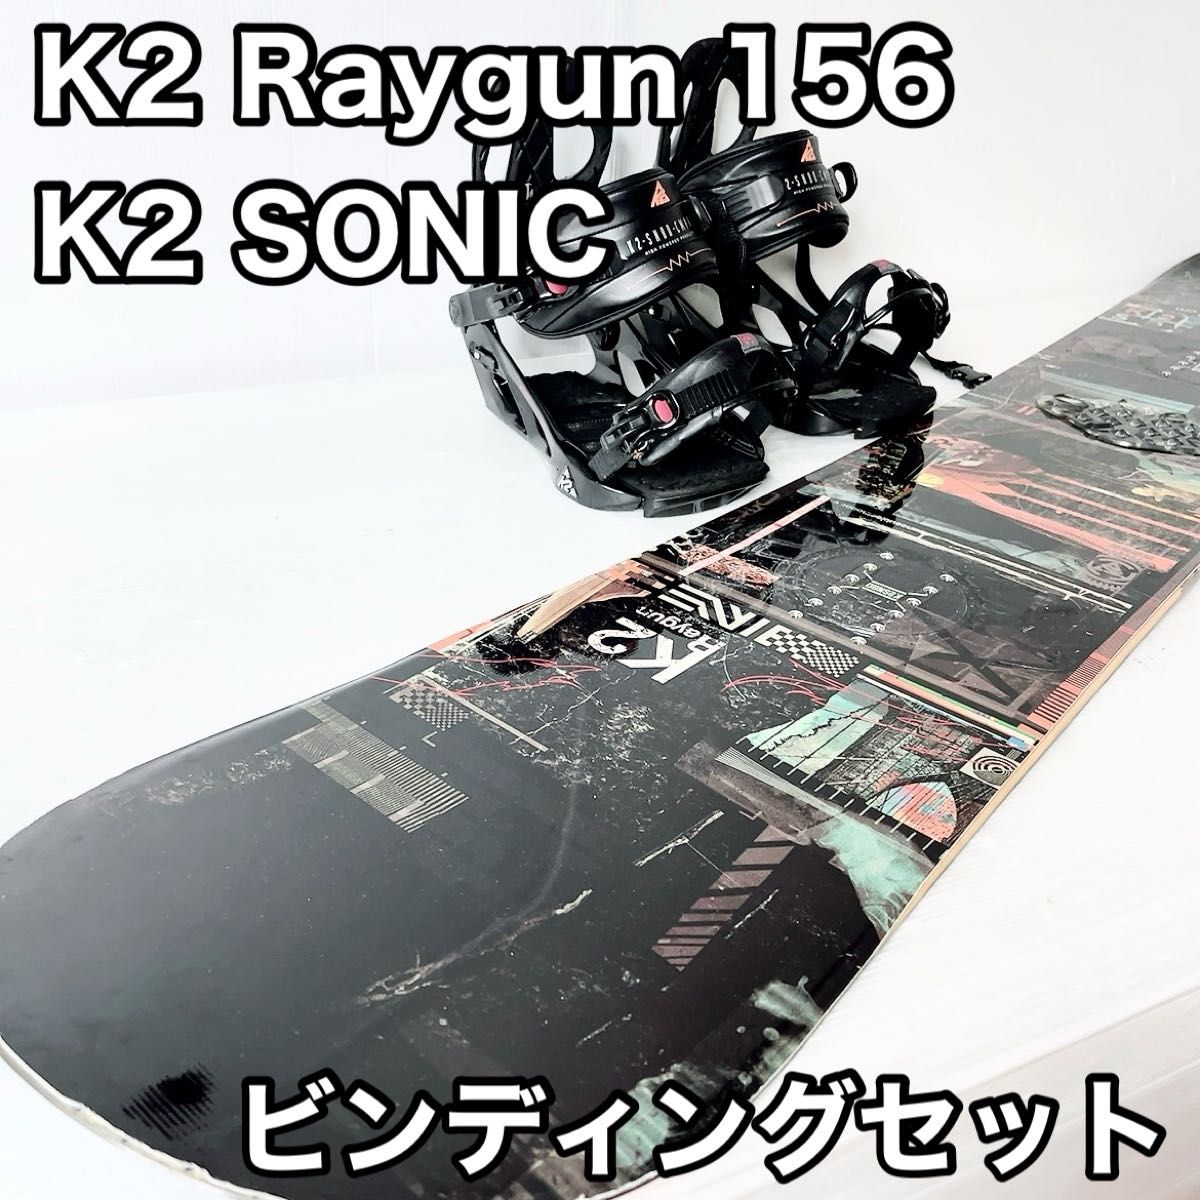 K2 Raygun 156 SONIC スノーボード ビンディング セット レイガン 